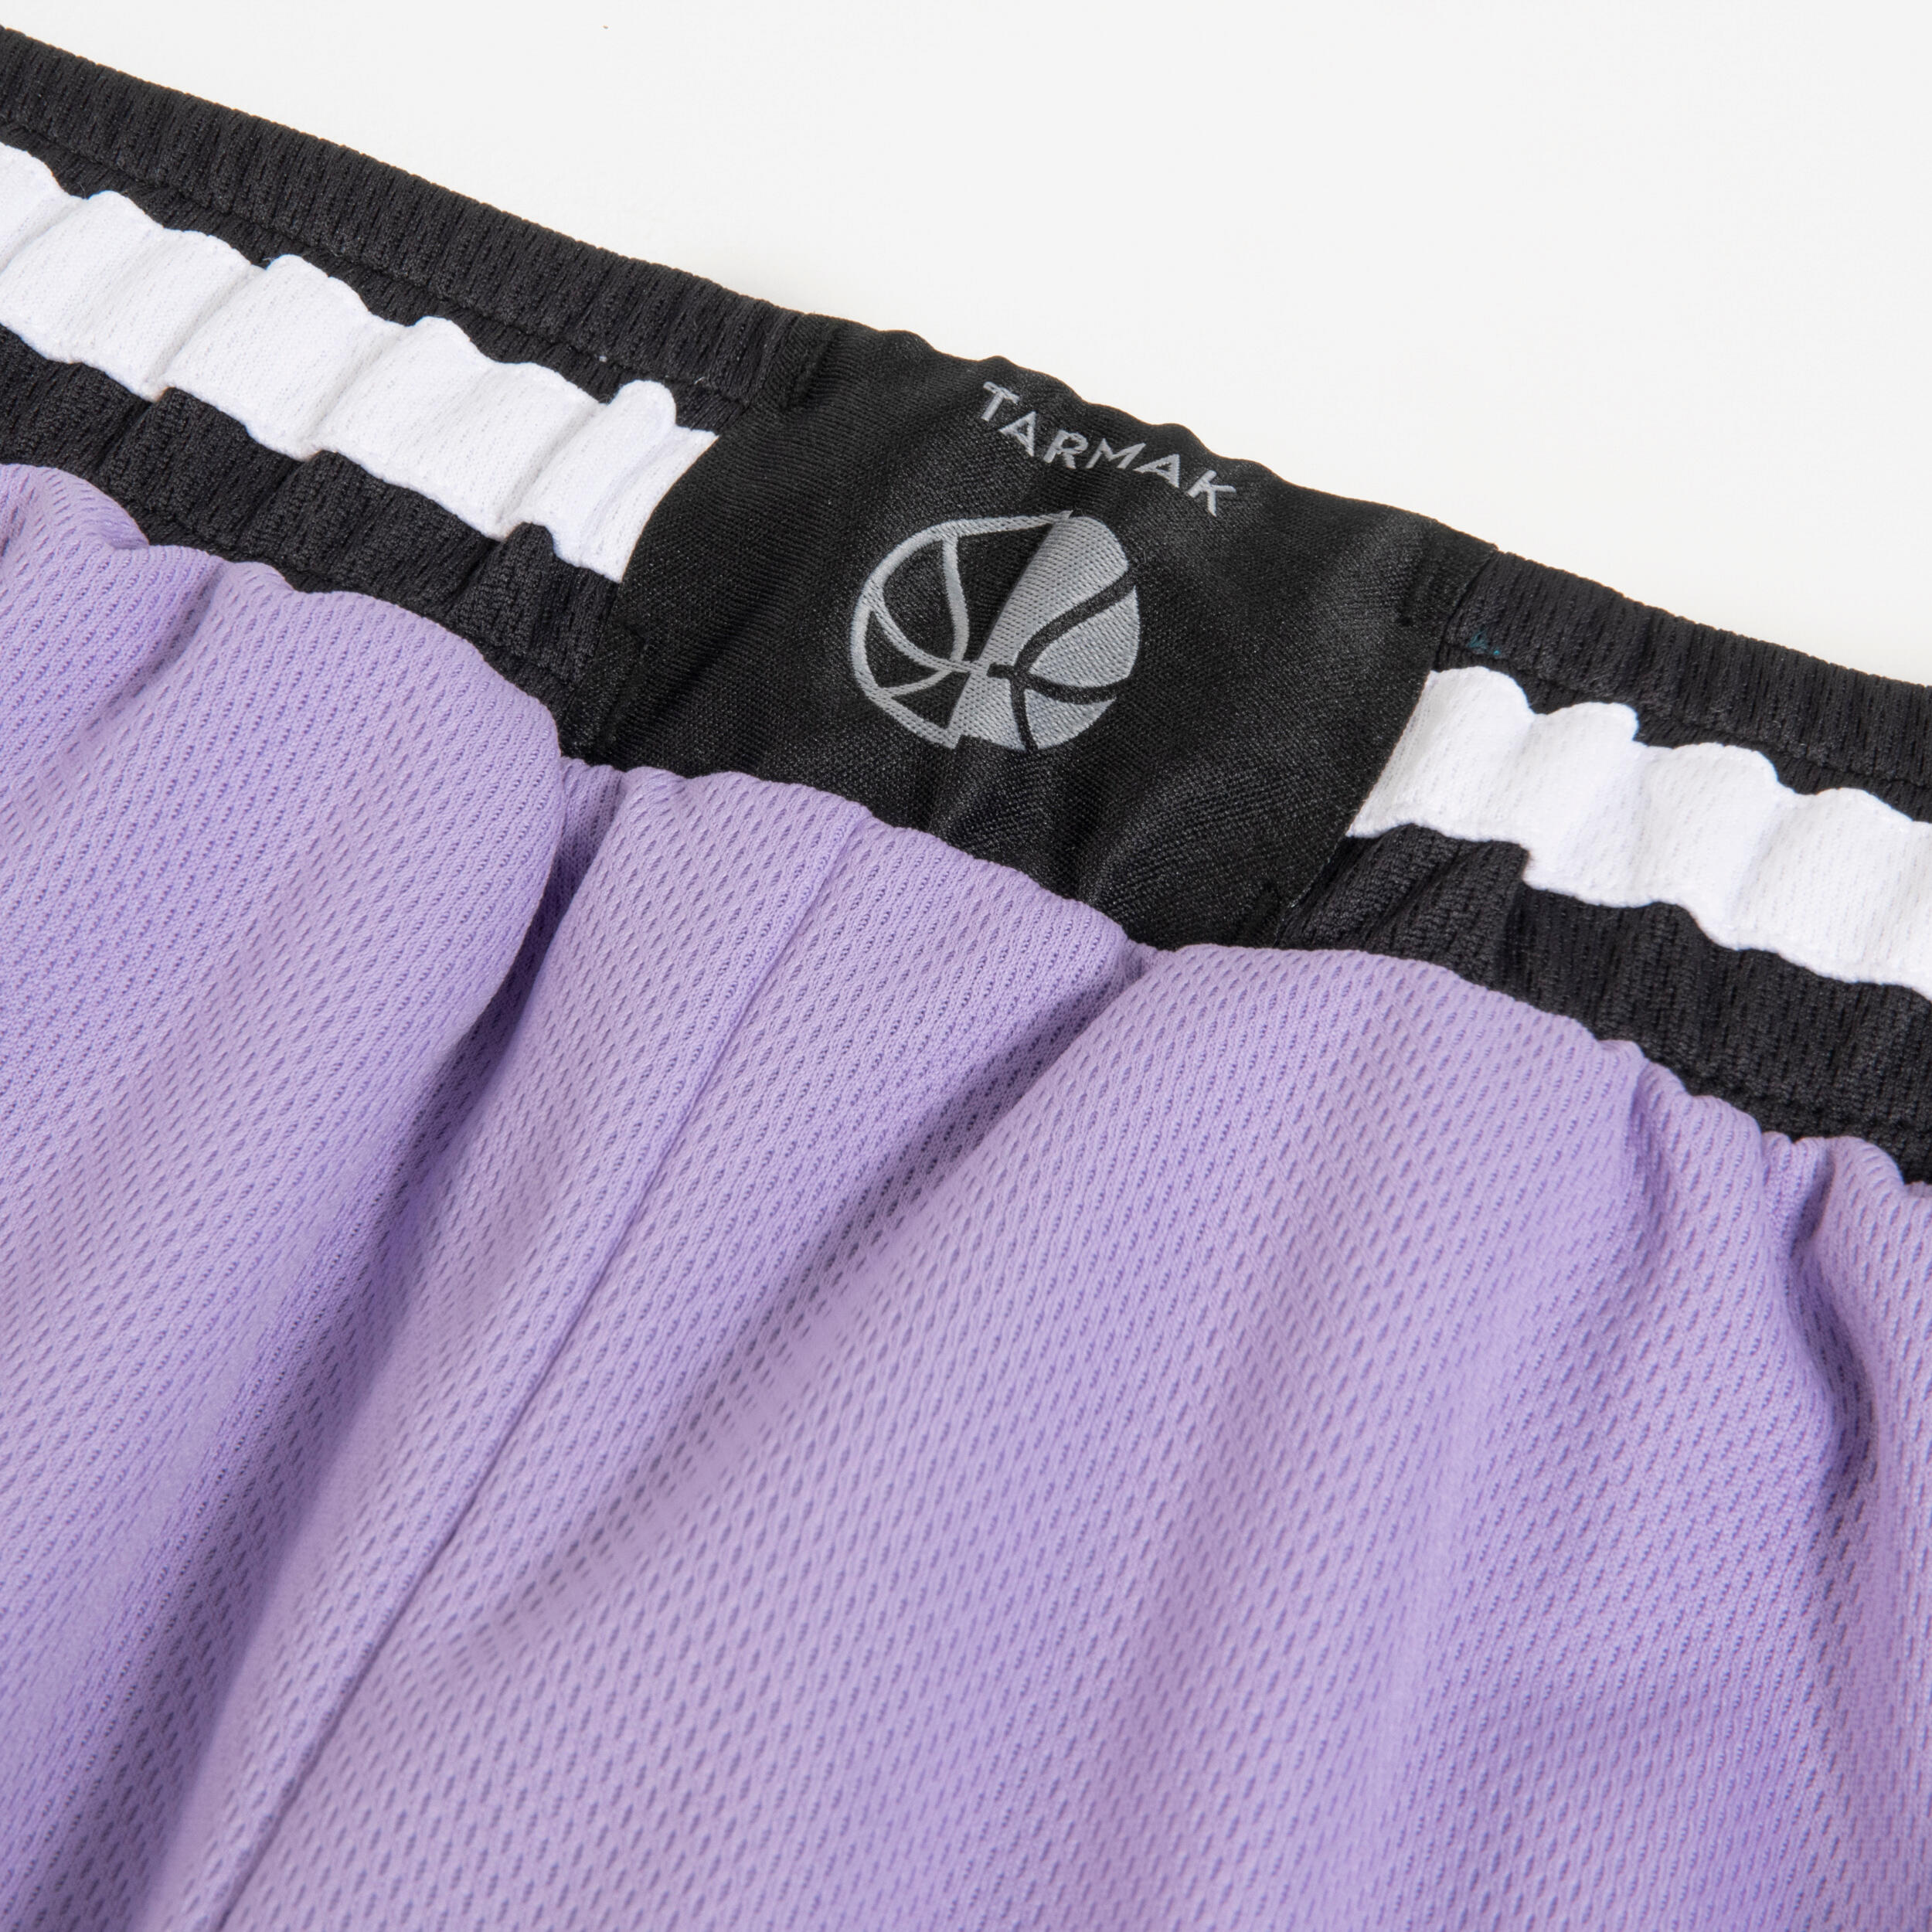 Men's/Women's Reversible Basketball Shorts SH500R - Purple/Lilac 7/11